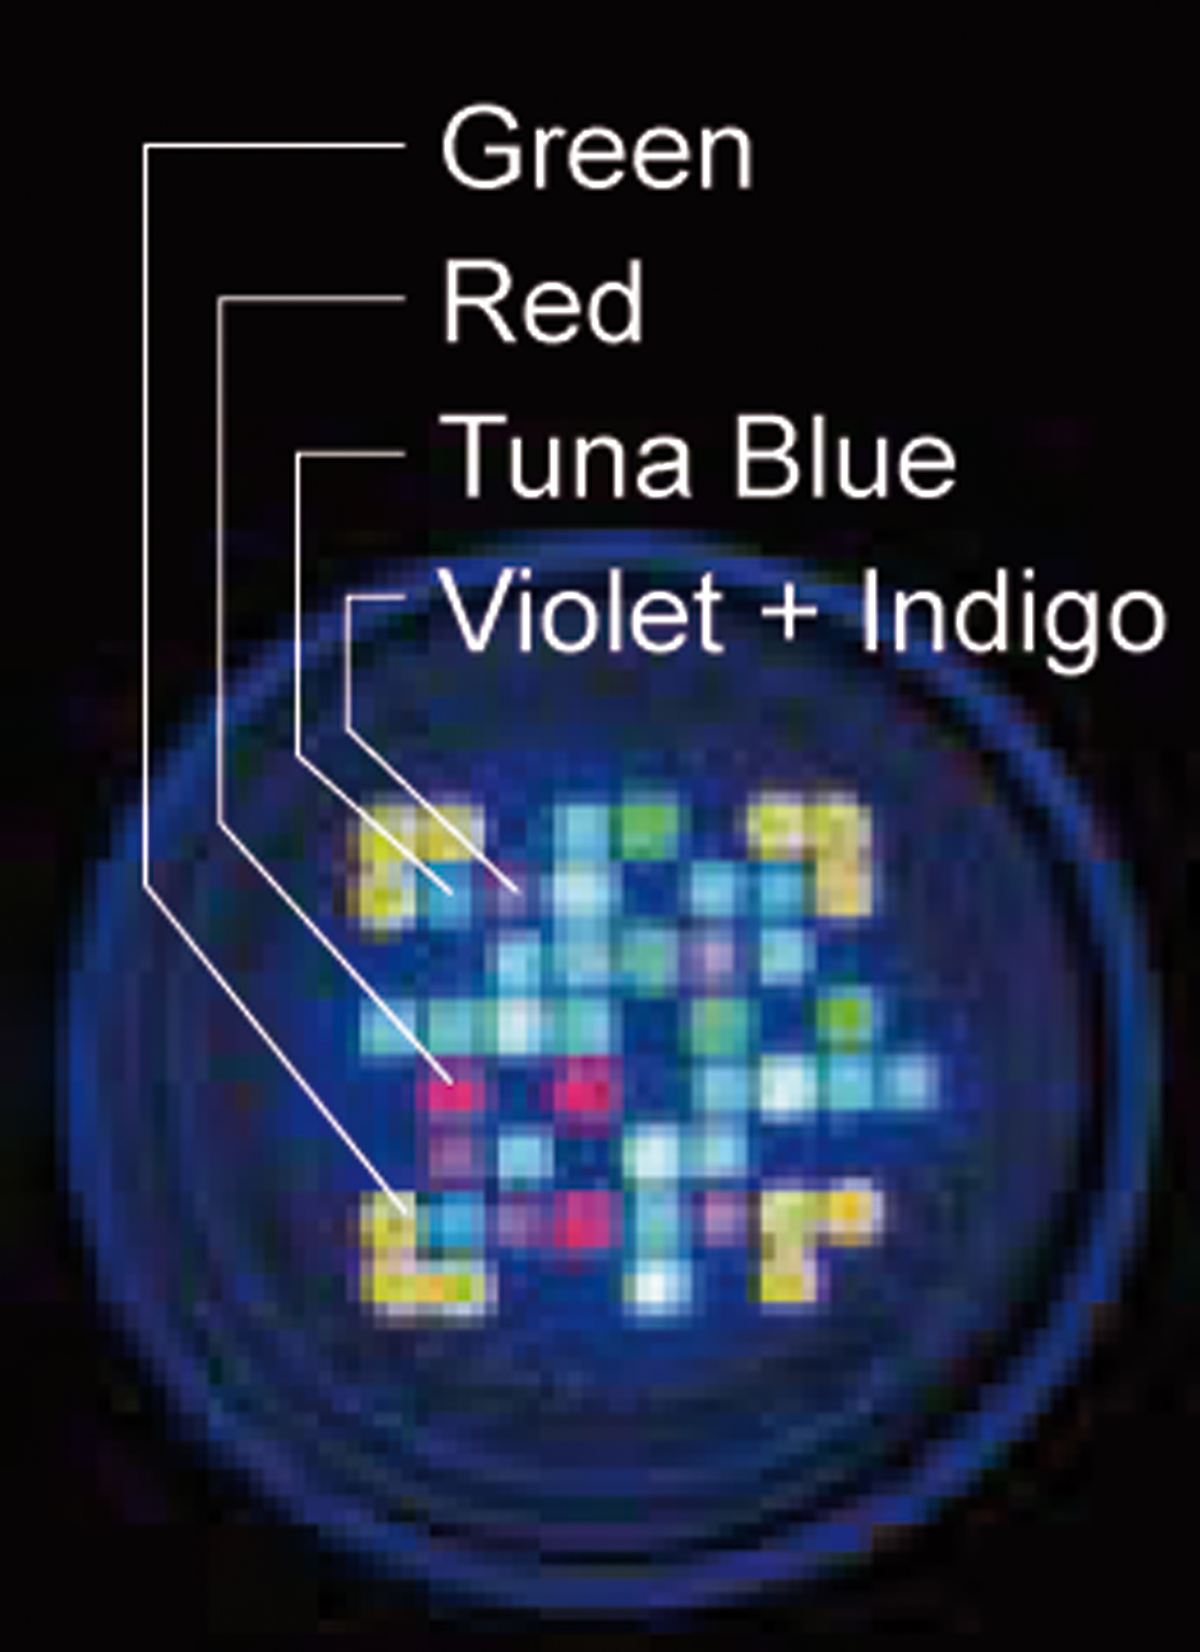 LED A360X Tuna Blue